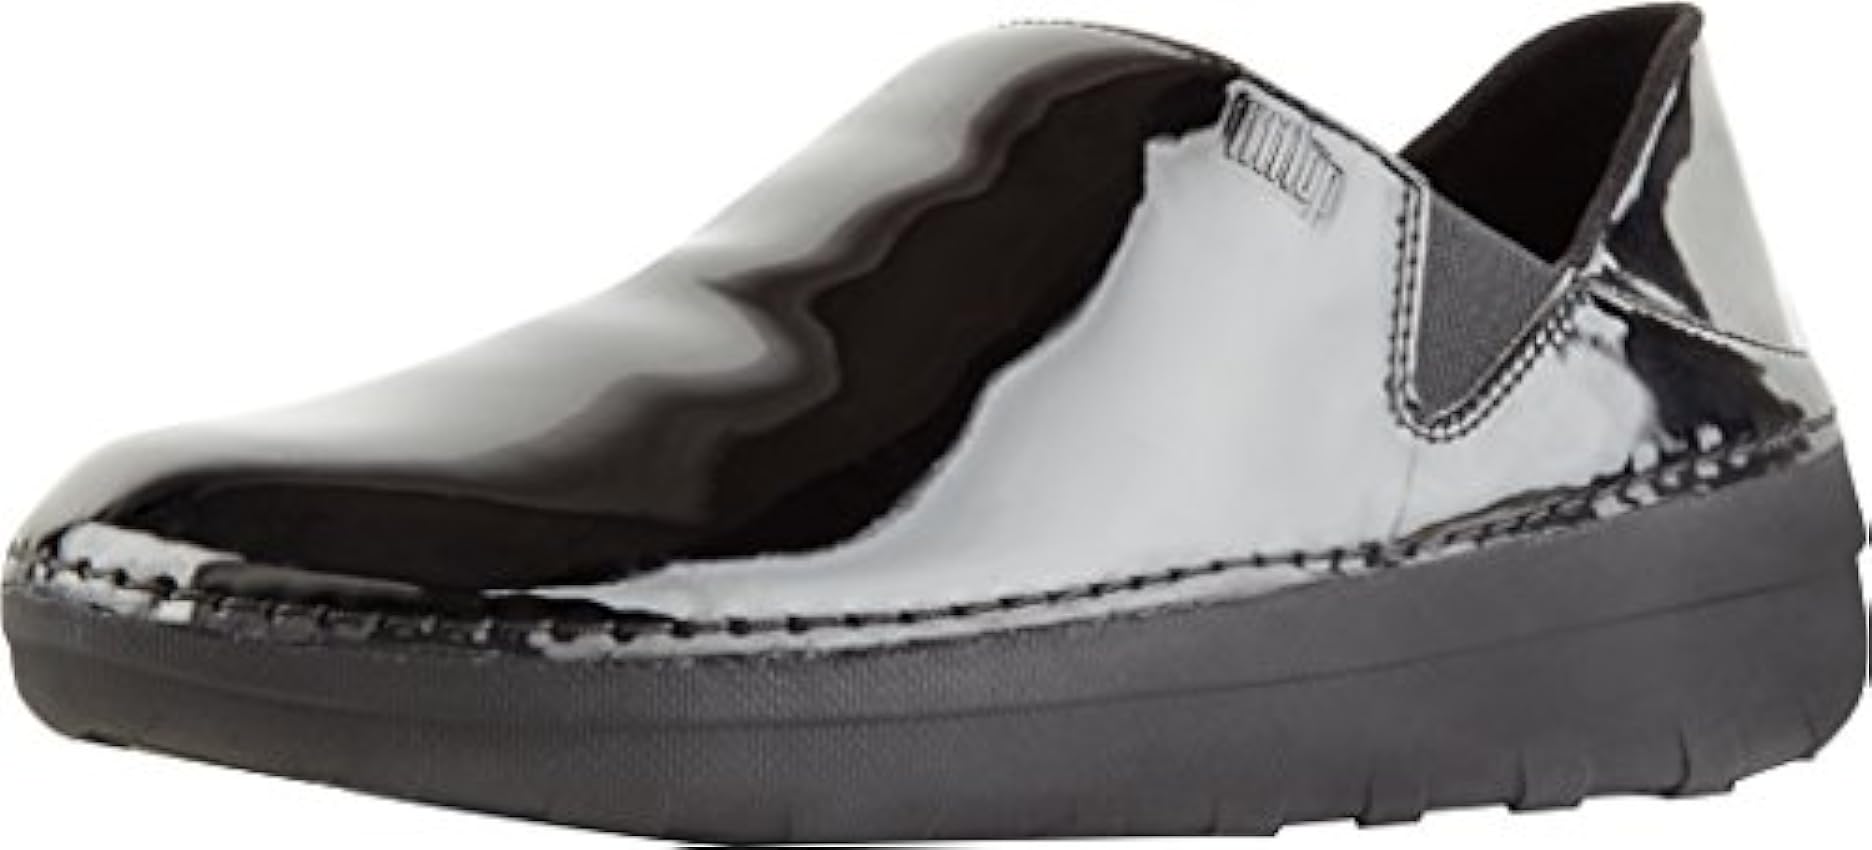 Fitflop Superloafer-Patent, Sneaker Mujer, 36 EU c1tsO5Sv